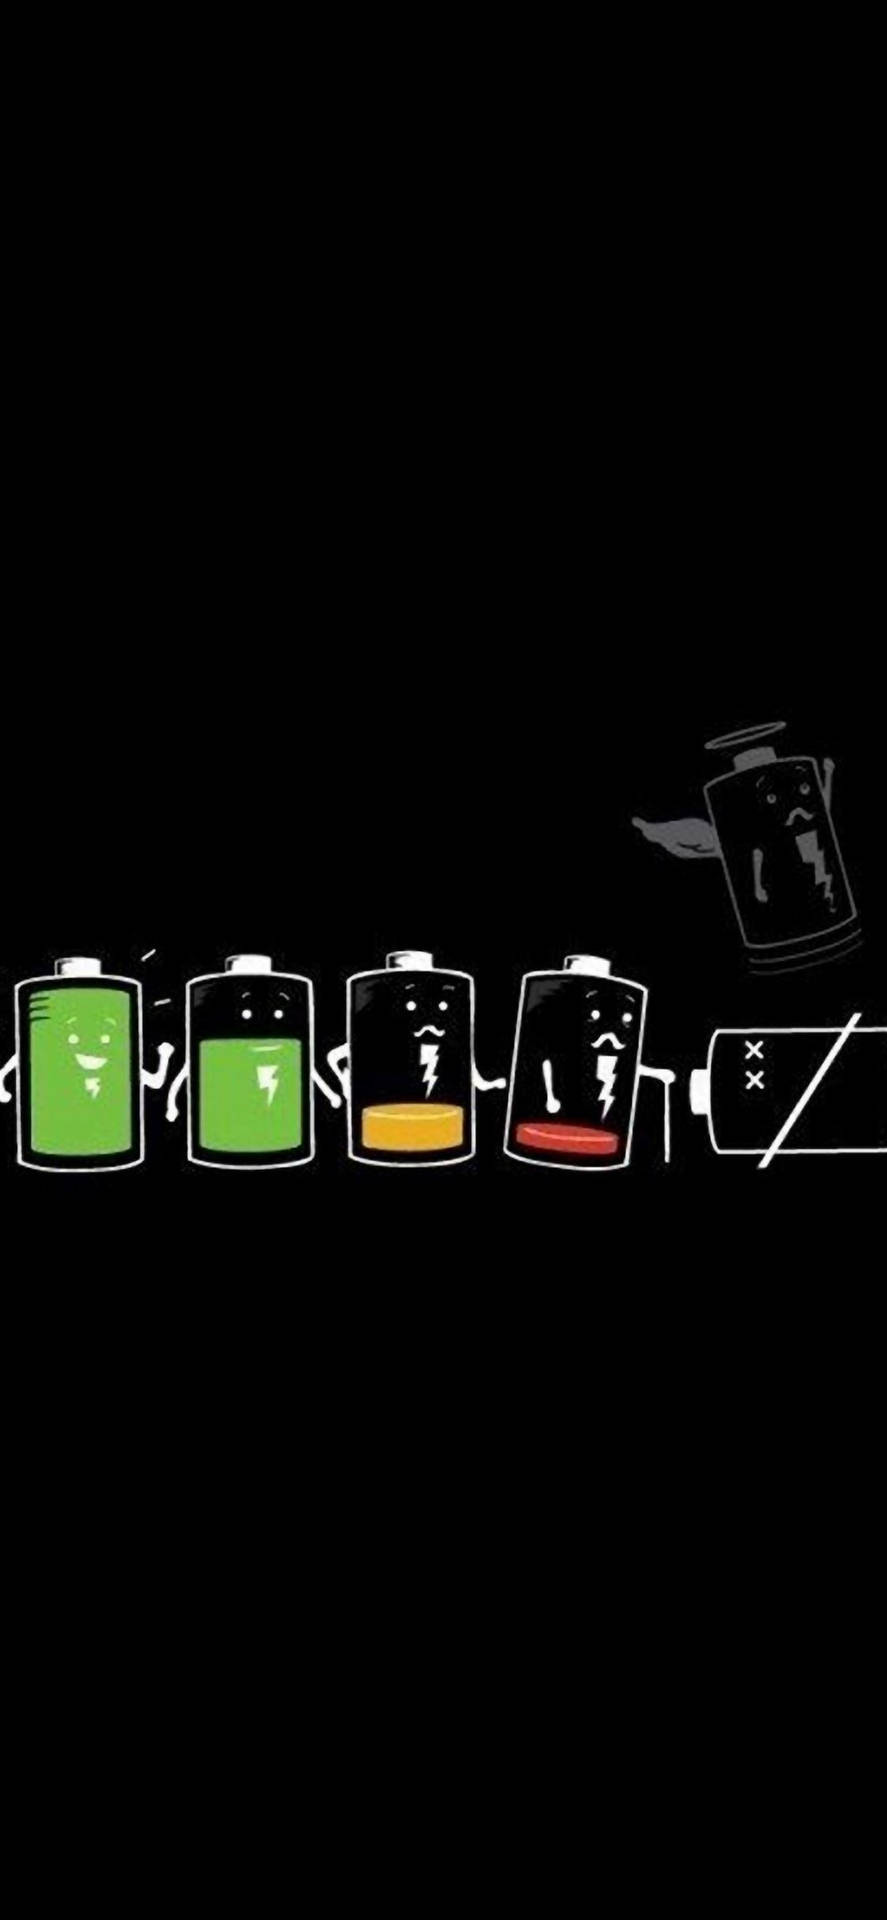 Ciclode Vida De La Batería Iphone Oscuro Fondo de pantalla